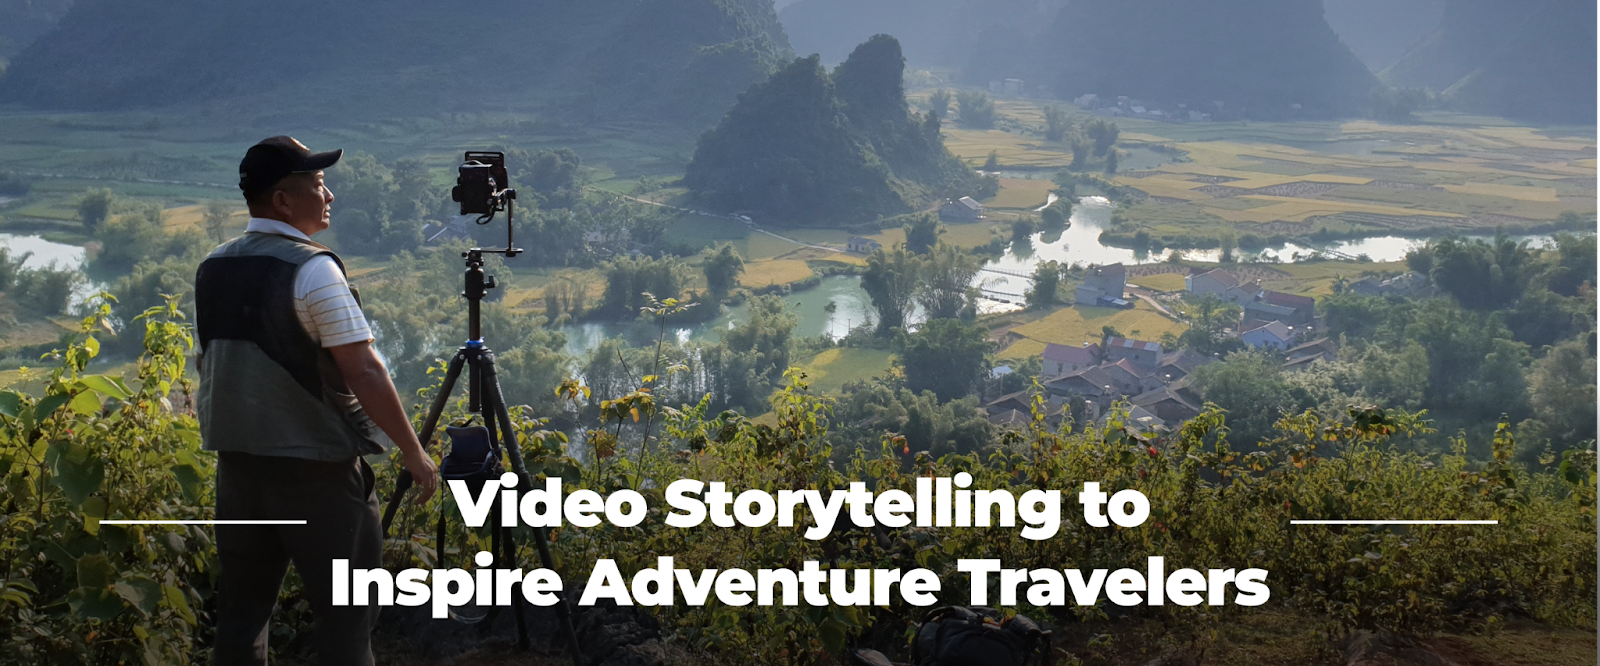 Video Storytelling to Inspire Adventure Travelers